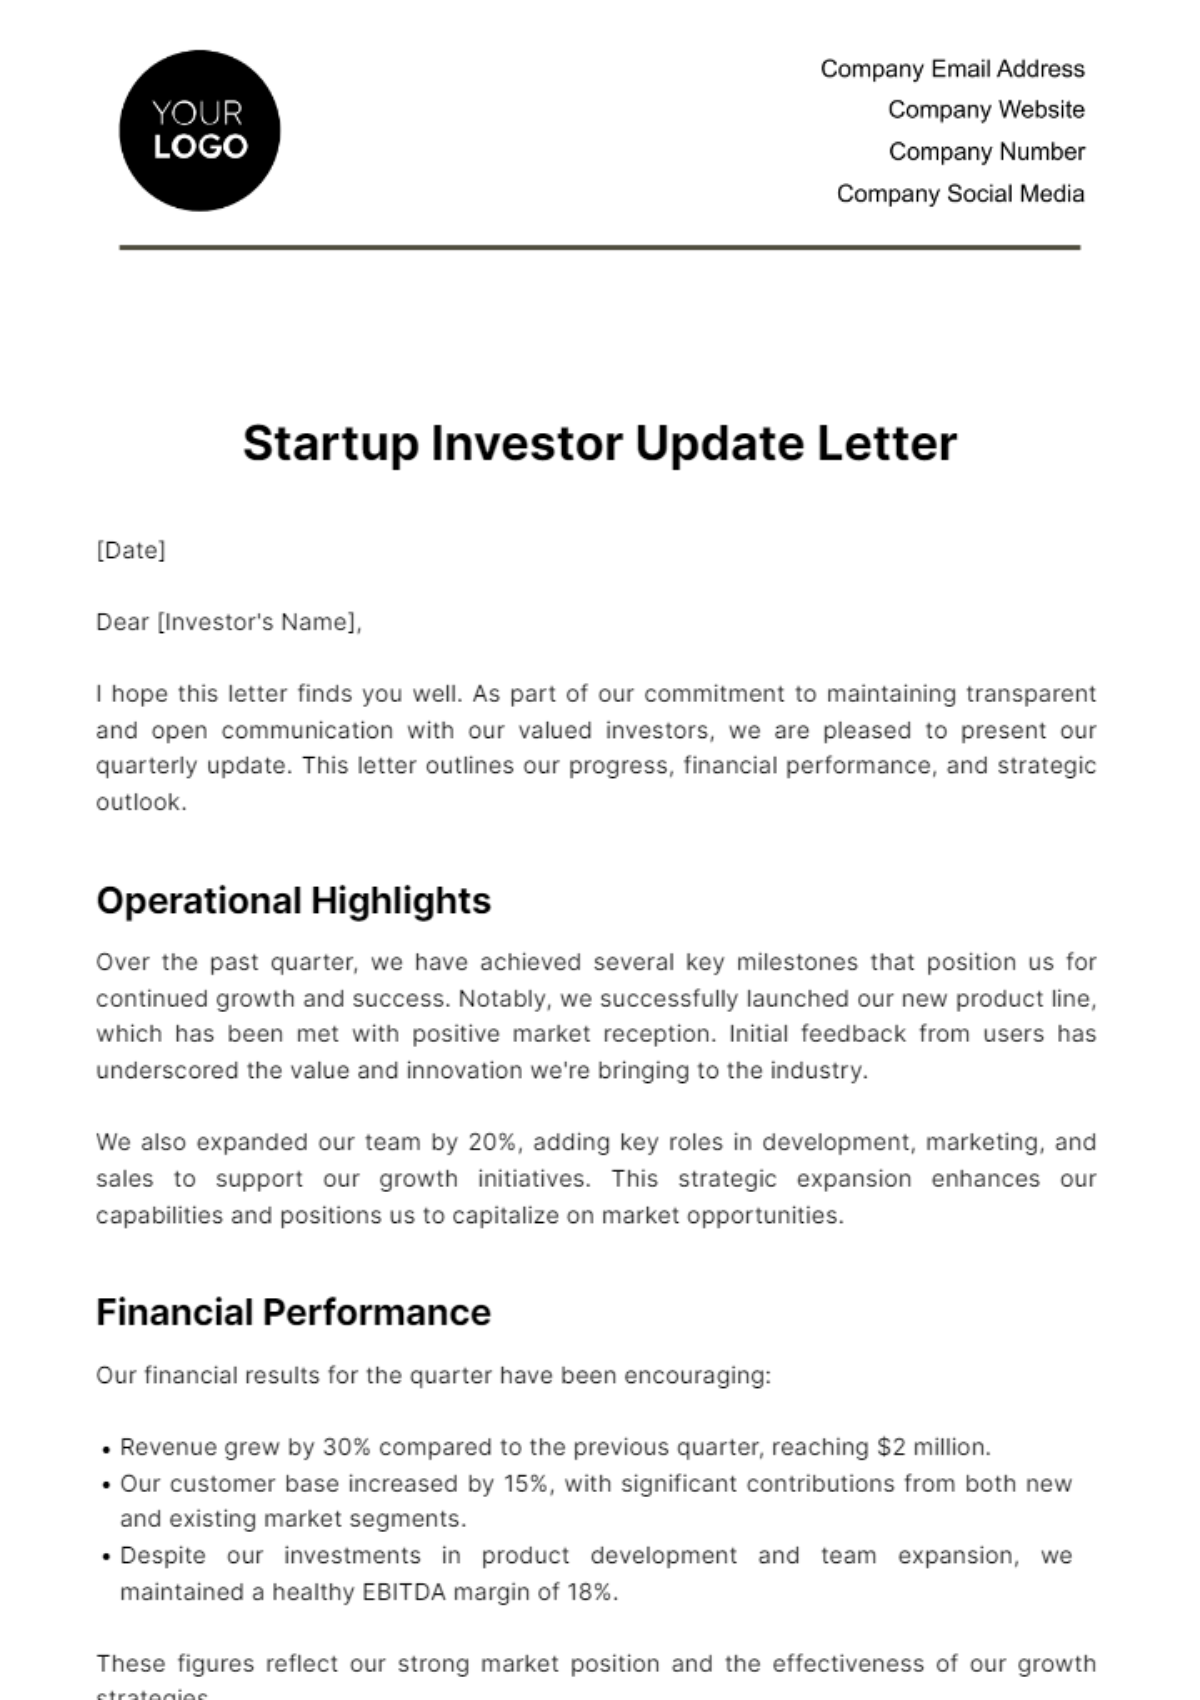 Startup Investor Update Letter Template